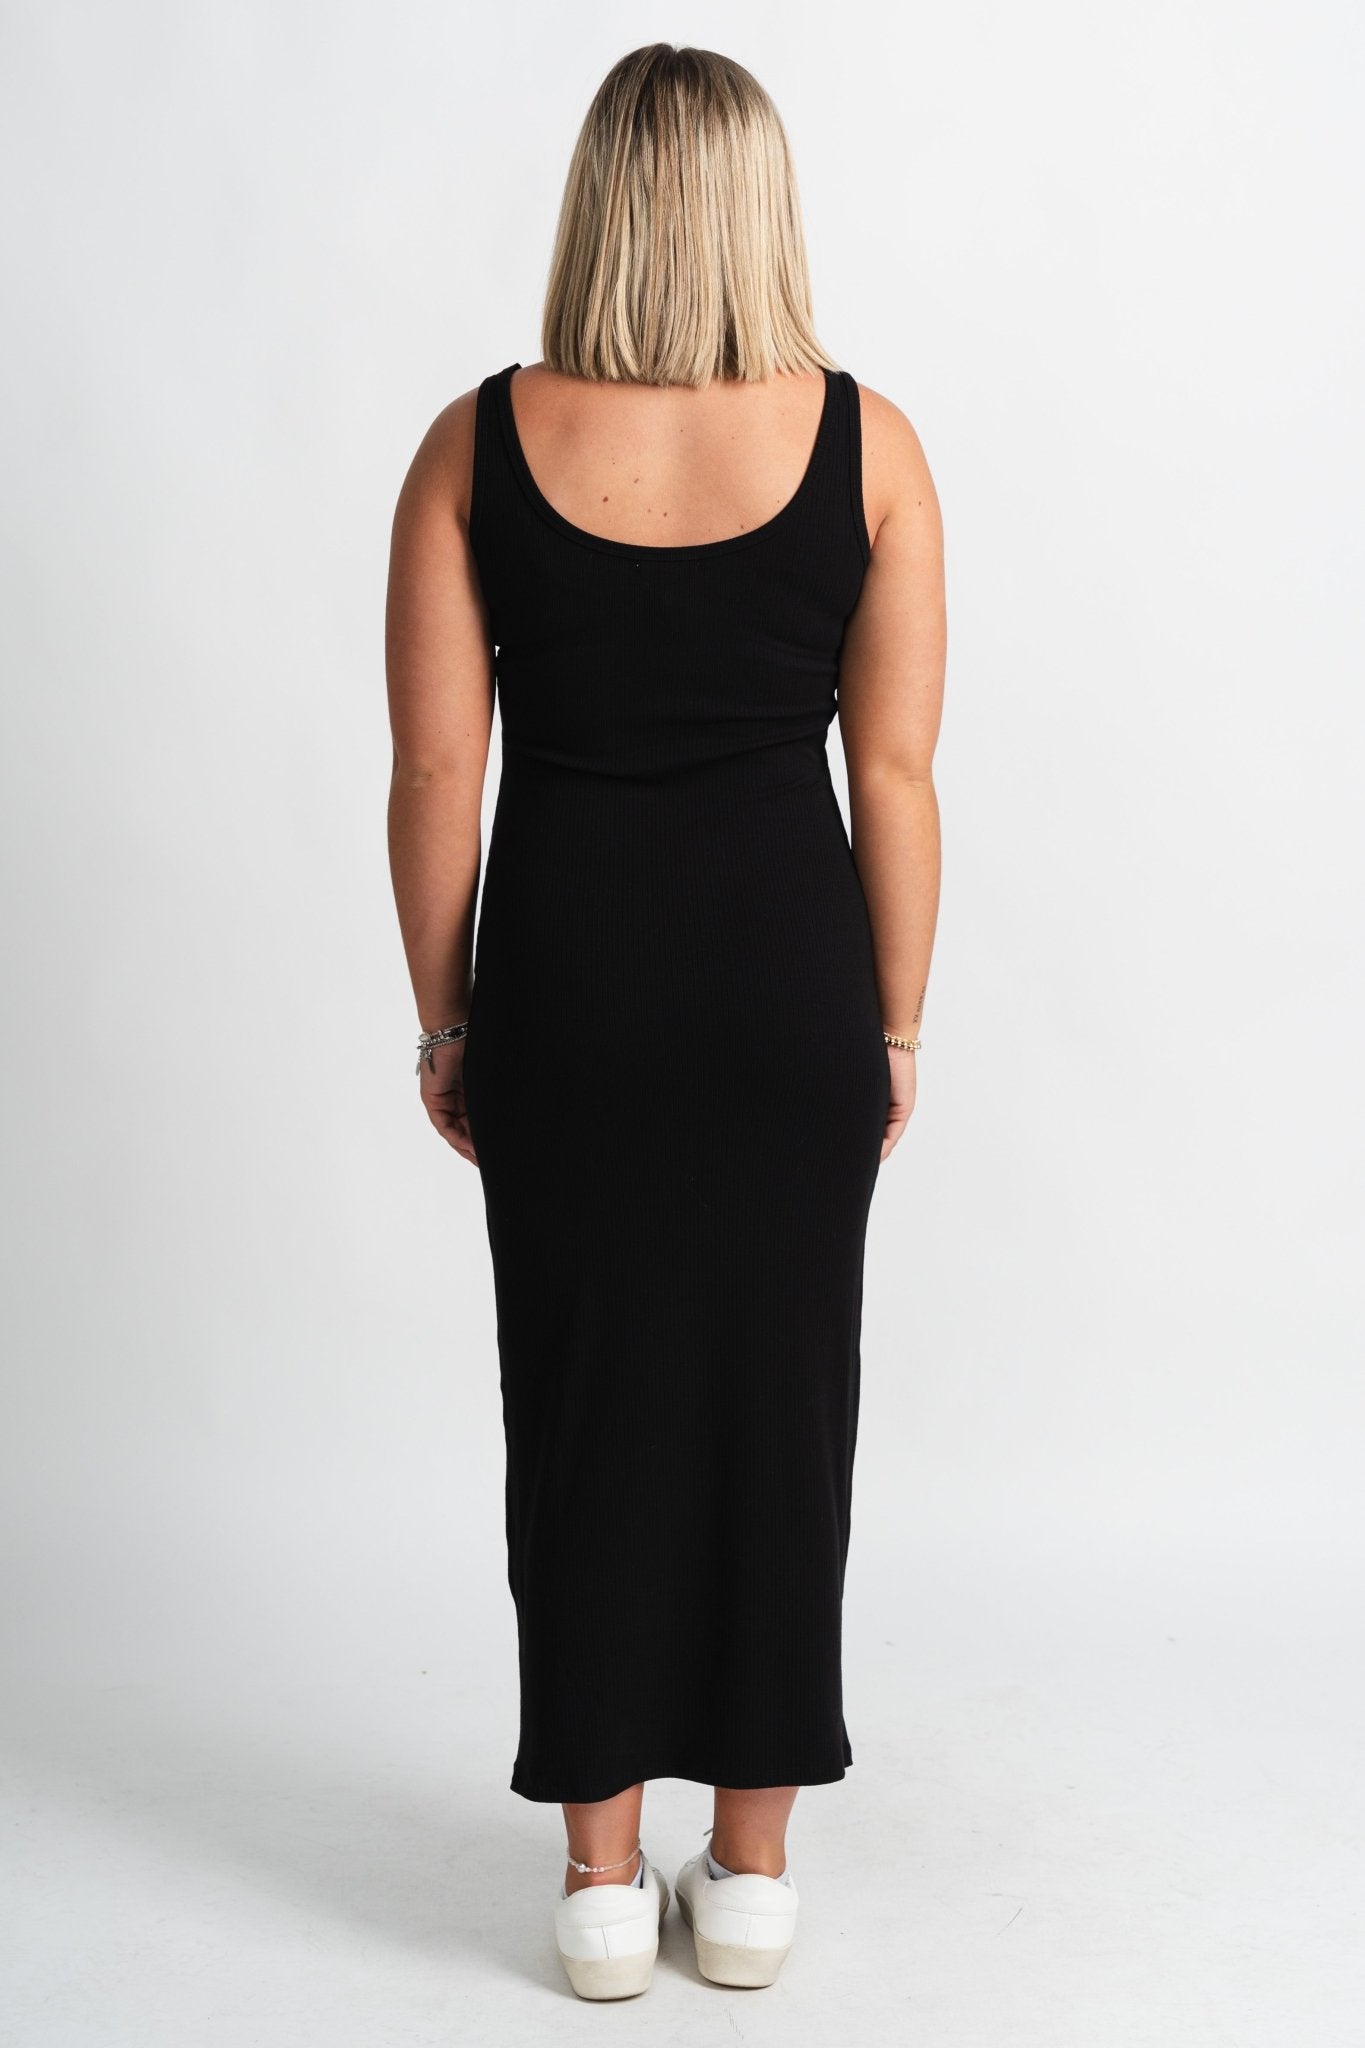 Z Supply Viviana midi dress black - Affordable dress - Boutique Dresses at Lush Fashion Lounge Boutique in Oklahoma City